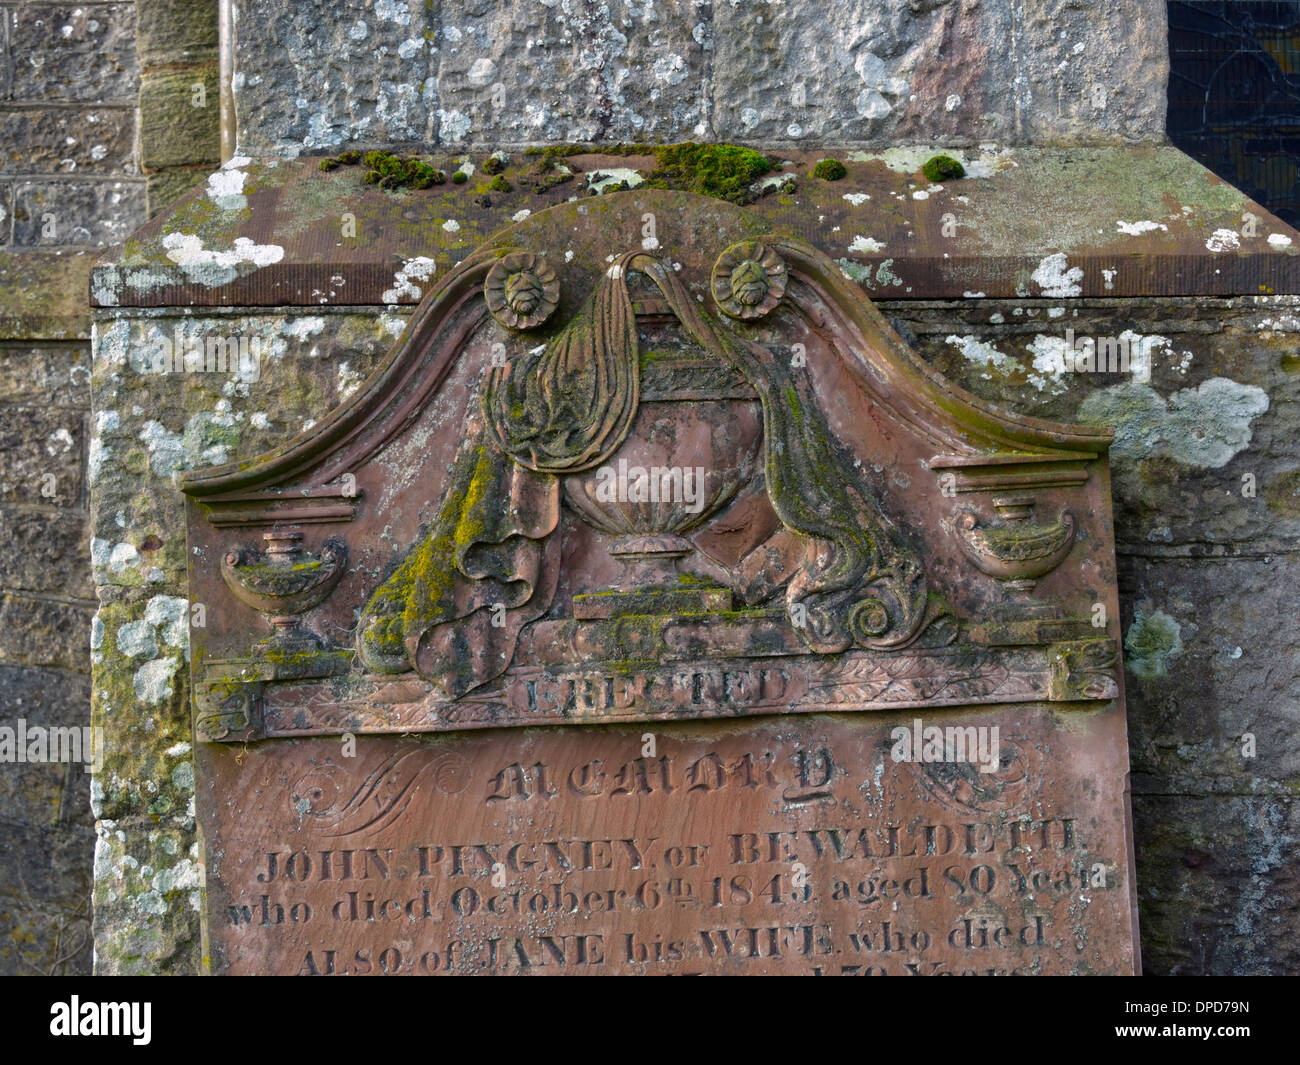 19th. century gravestone with draped urn and book design. Church of Saint Michael. Torpenhow, Cumbria, England, United Kingdom. Stock Photo